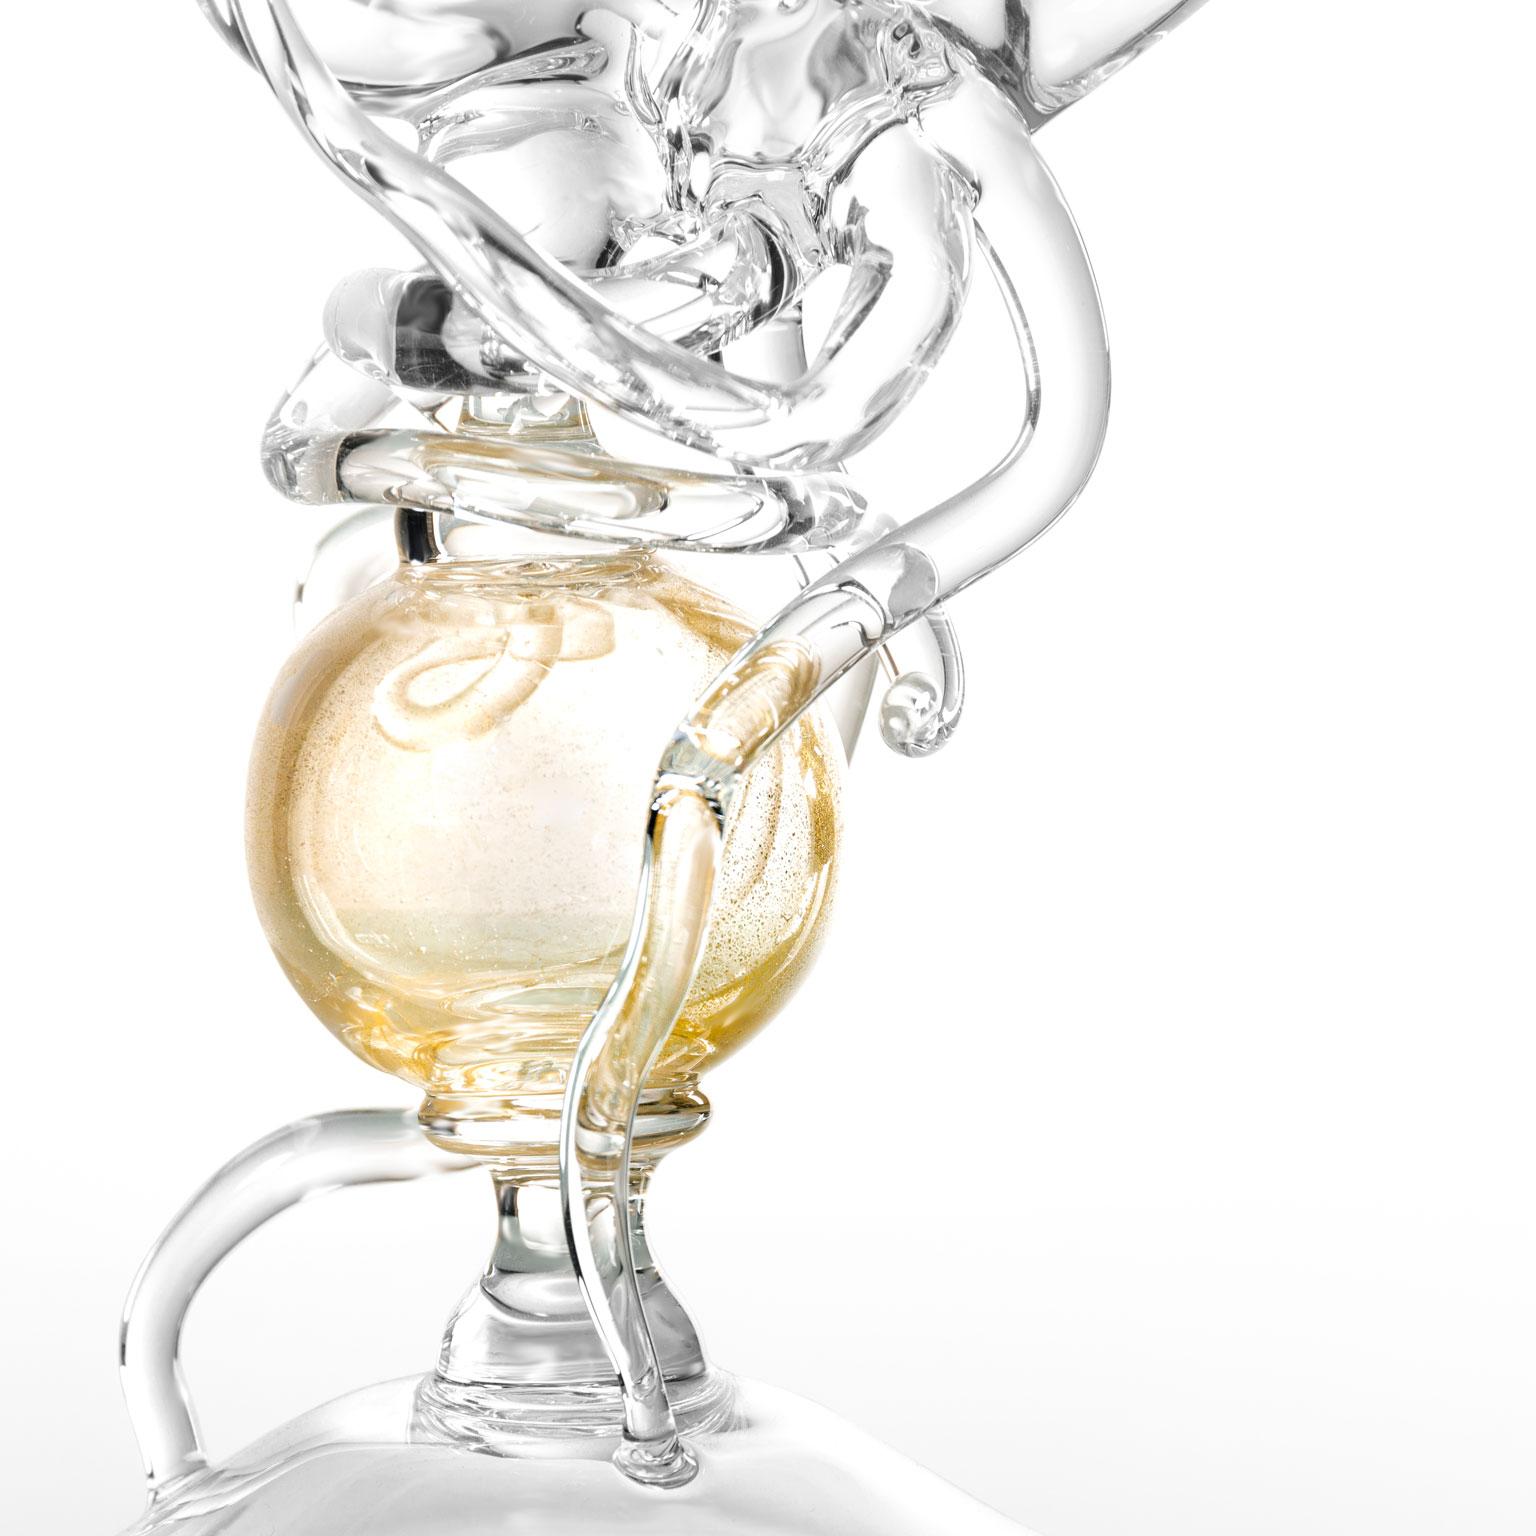 Fait main Contemporary Leggerezza Hand-Blown Glass Sculptural Flute Gold leaf #05 en vente